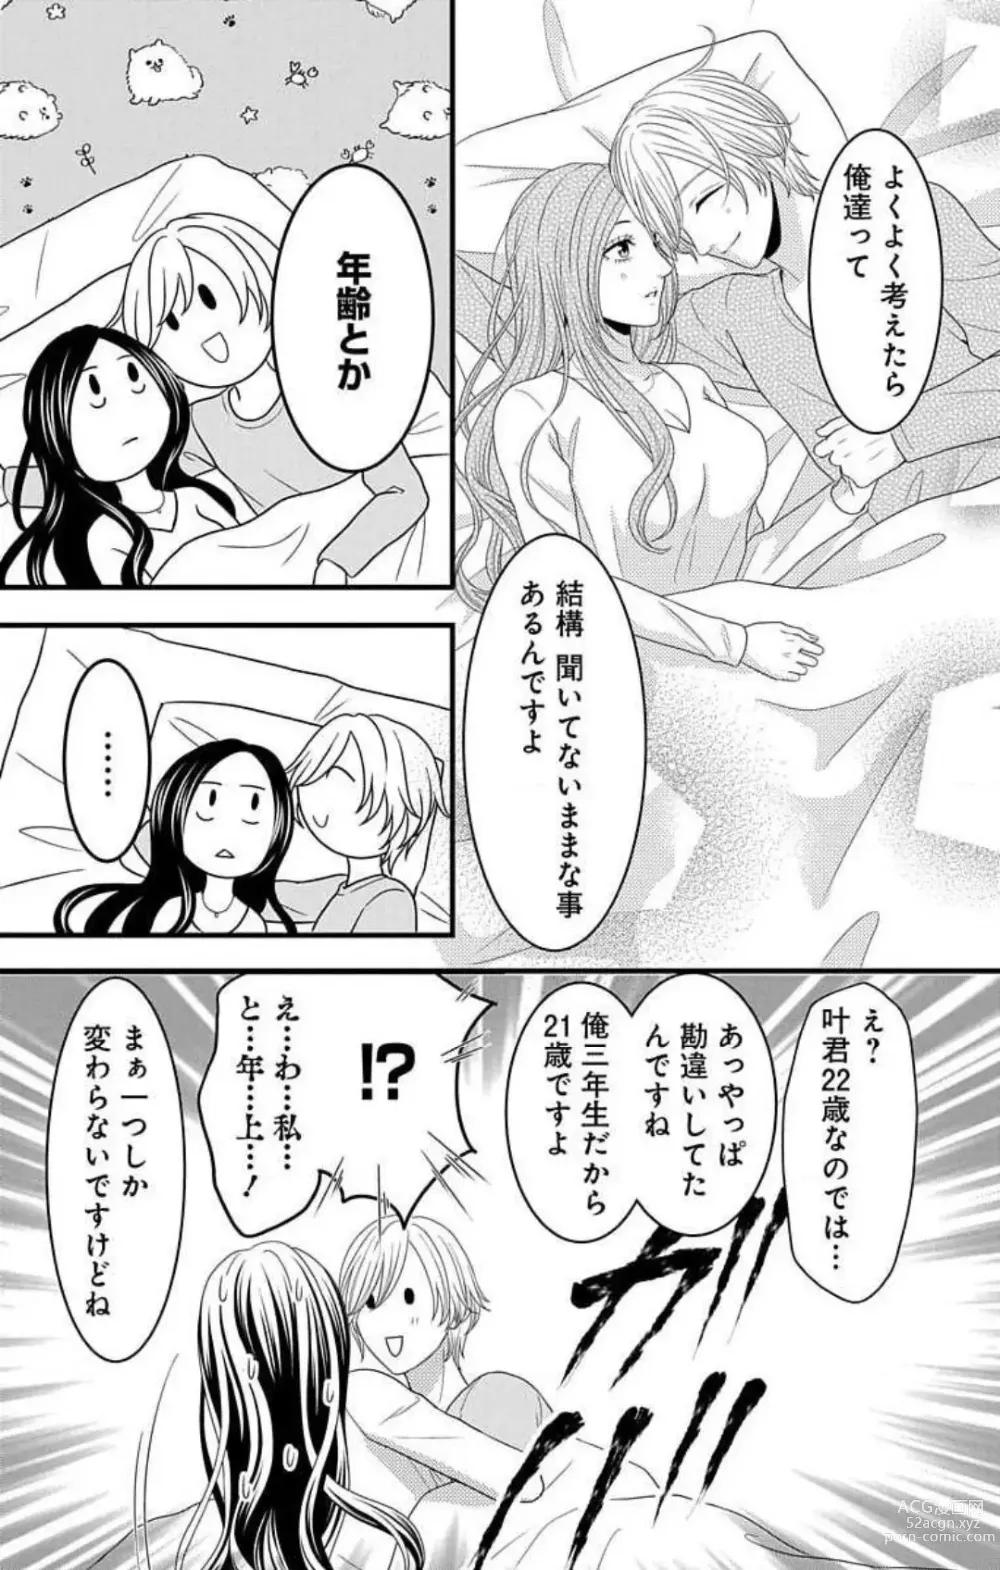 Page 22 of manga Mousou Shoujo 21-27